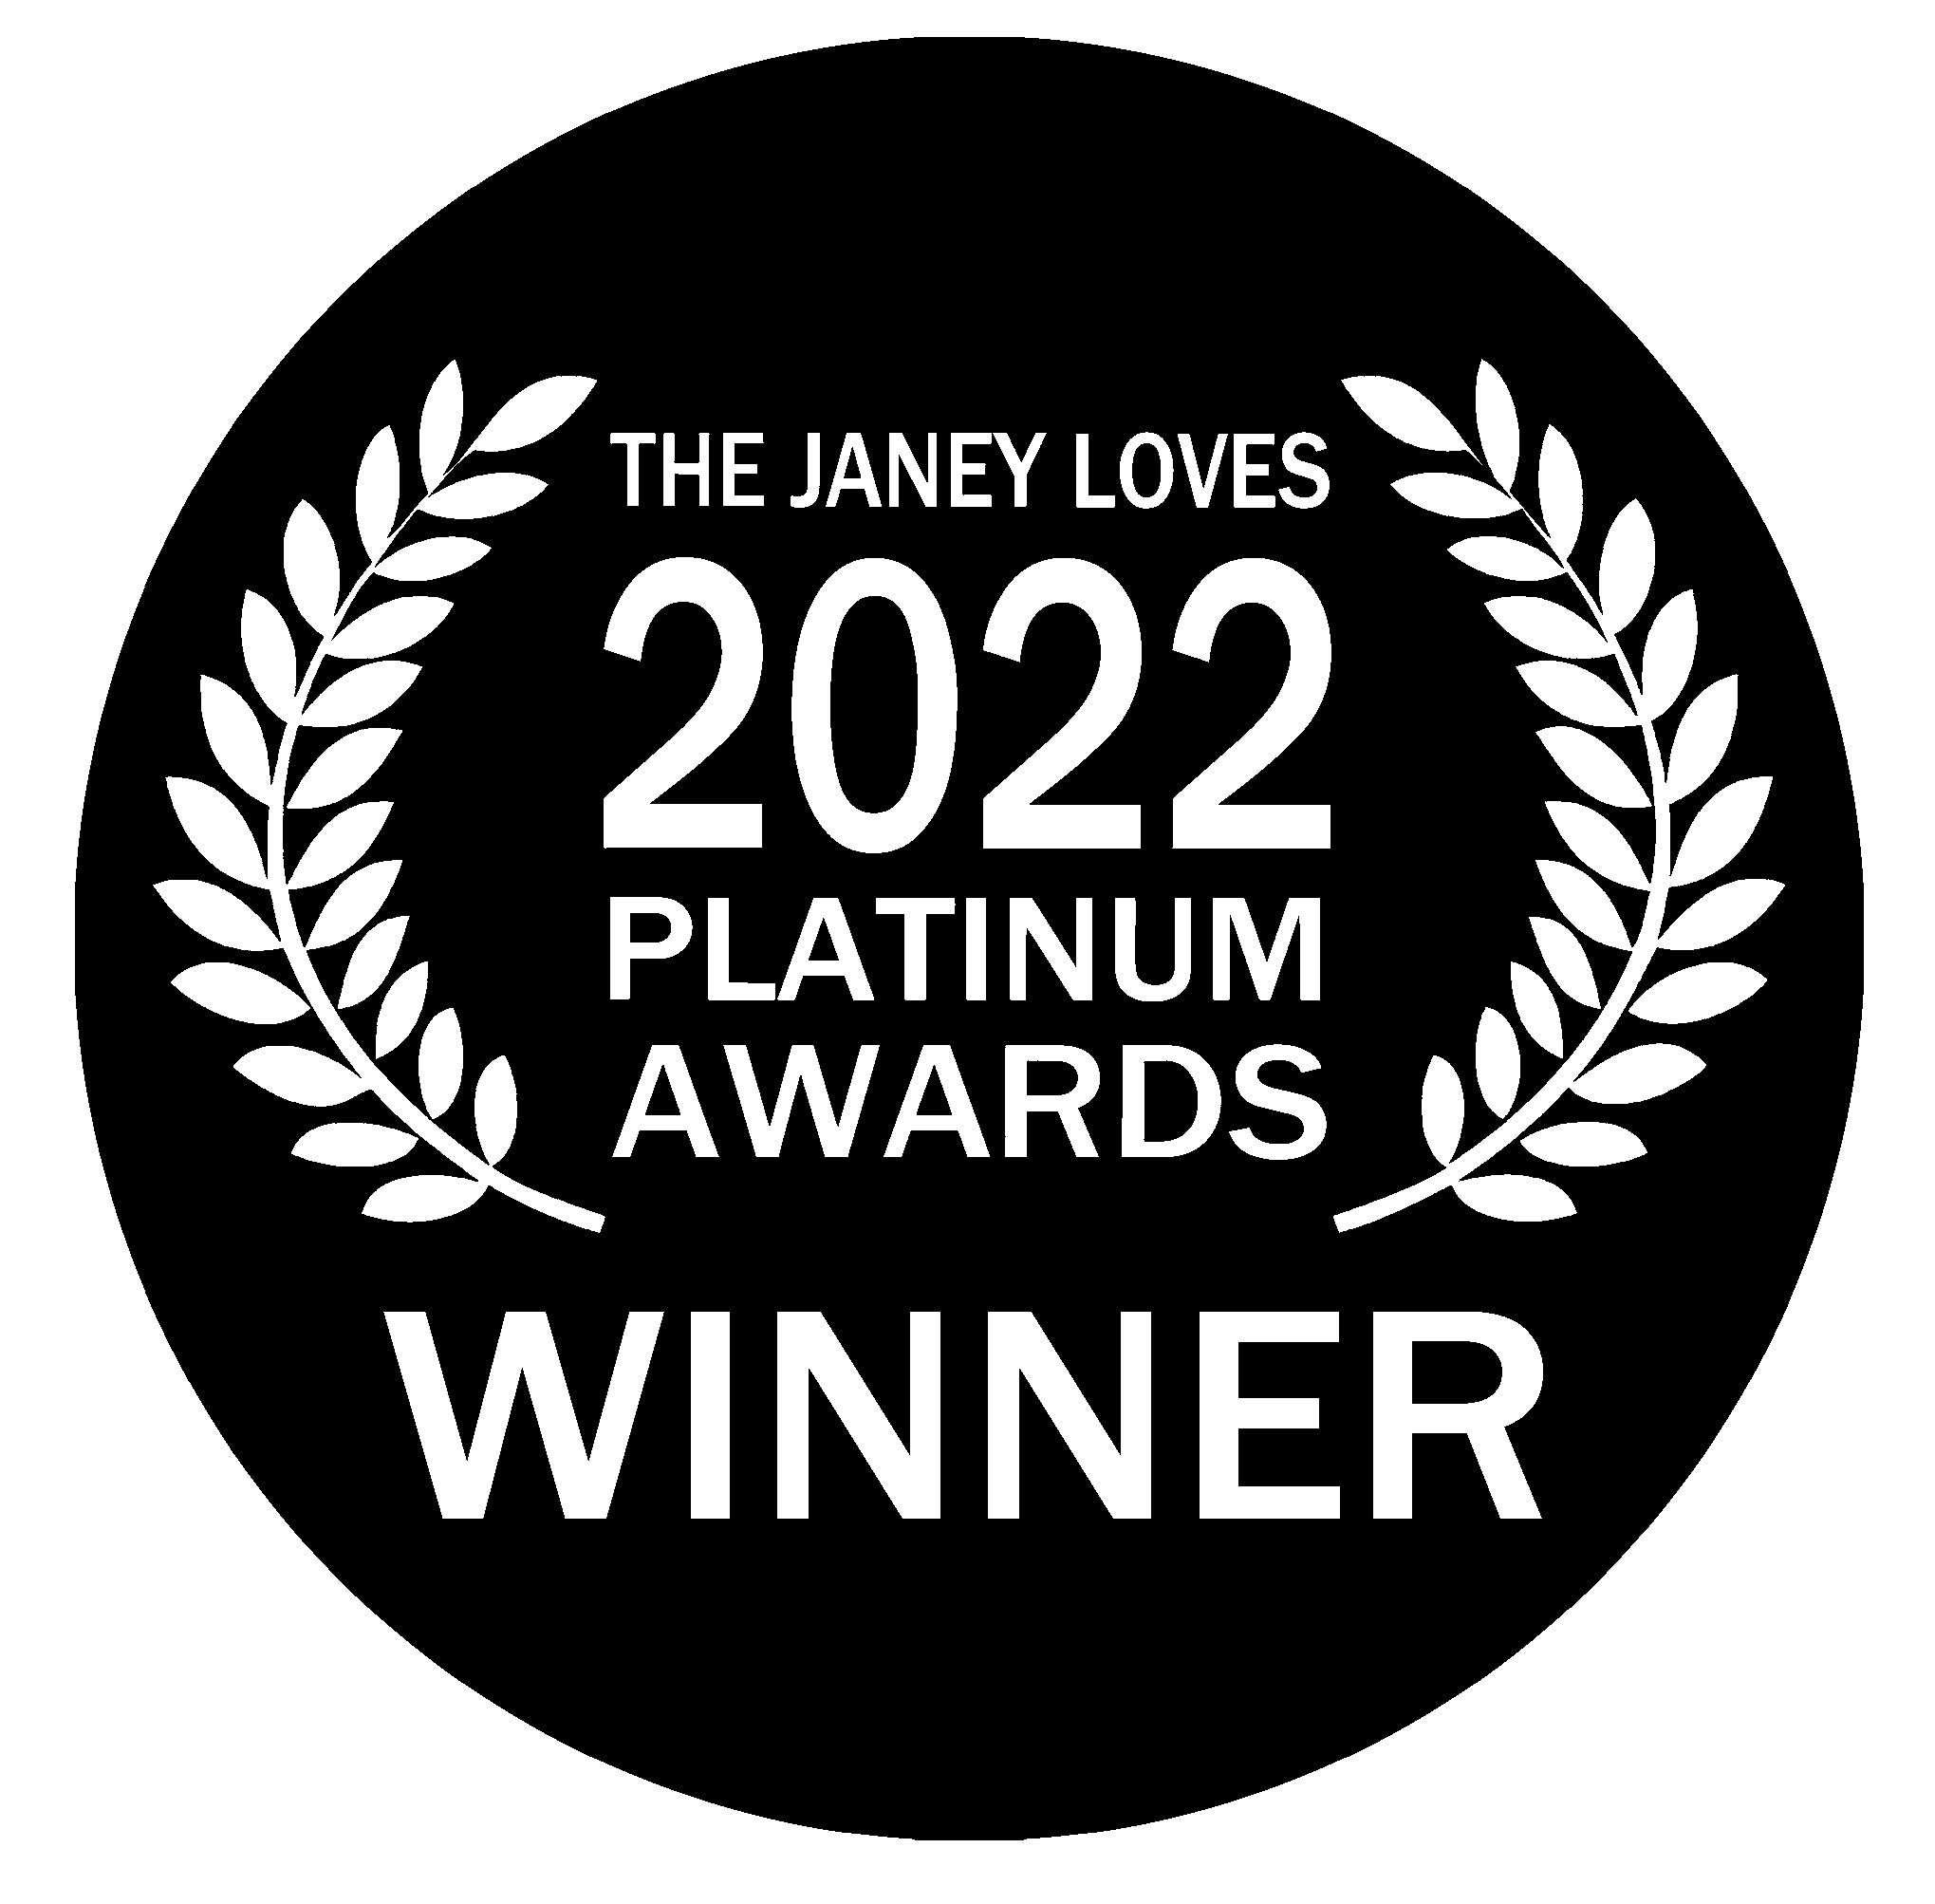 The Janey Love 2022 Platinum Awards - WINNER